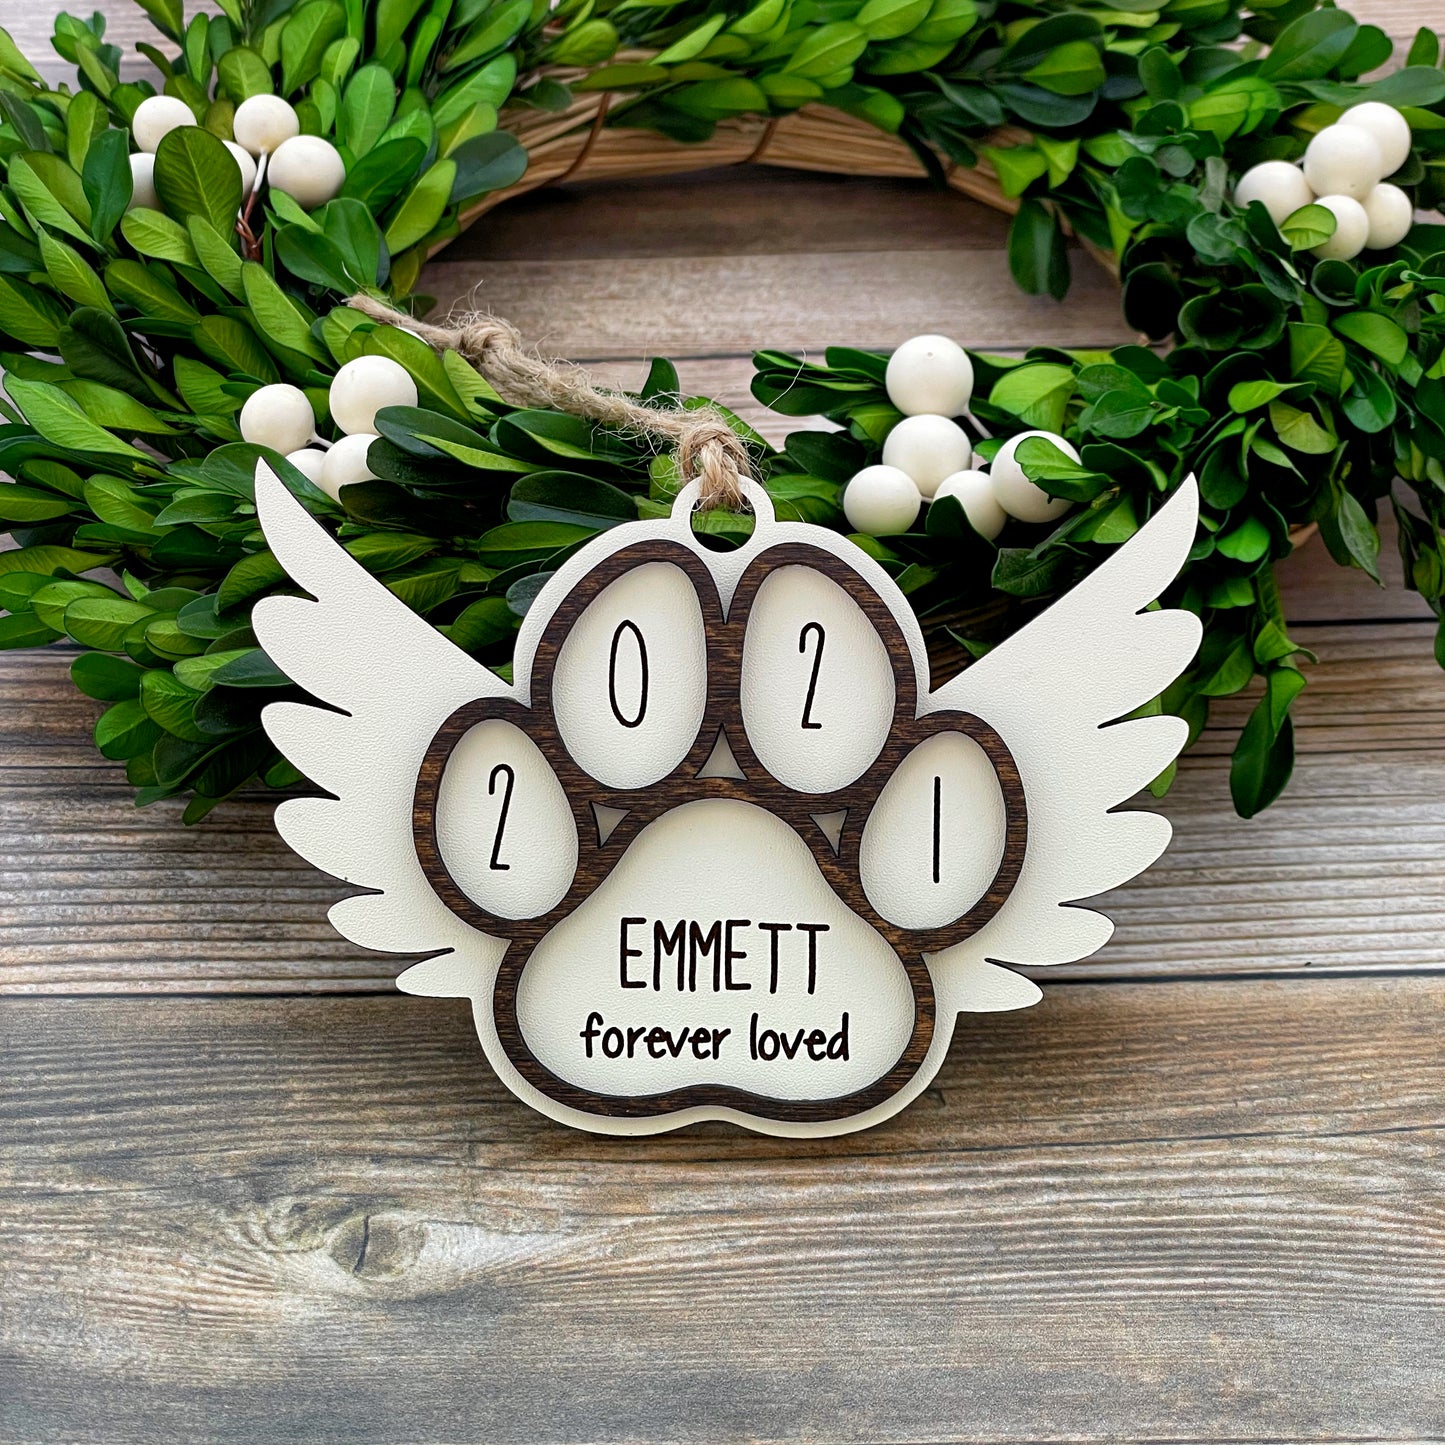 Pet loss engraved custom ornament, angel wings pet ornament, pet memorial